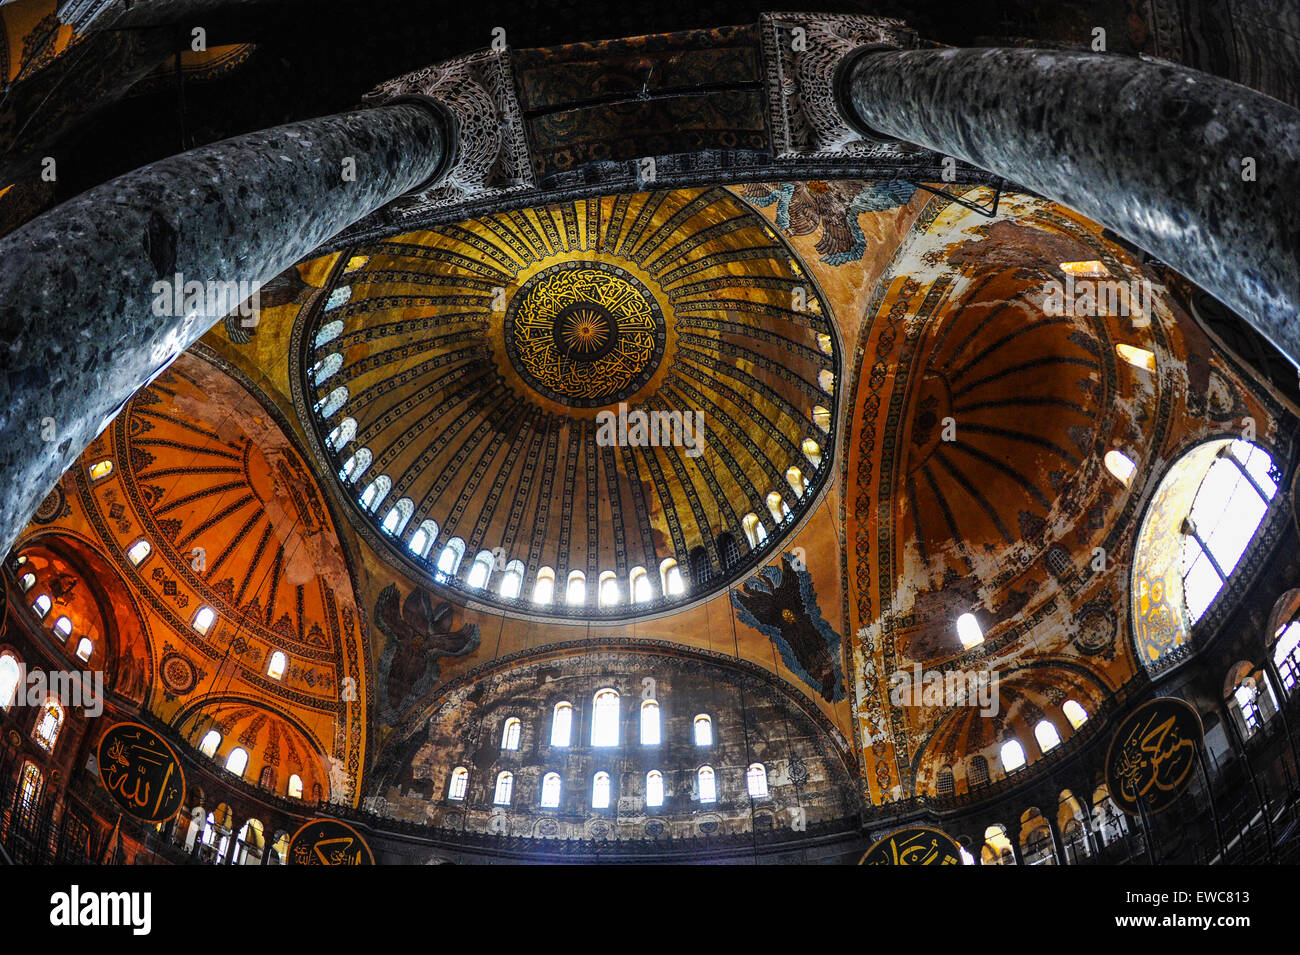 Inside The Hagia Sophia In Istanbul Turkey Stock Photo